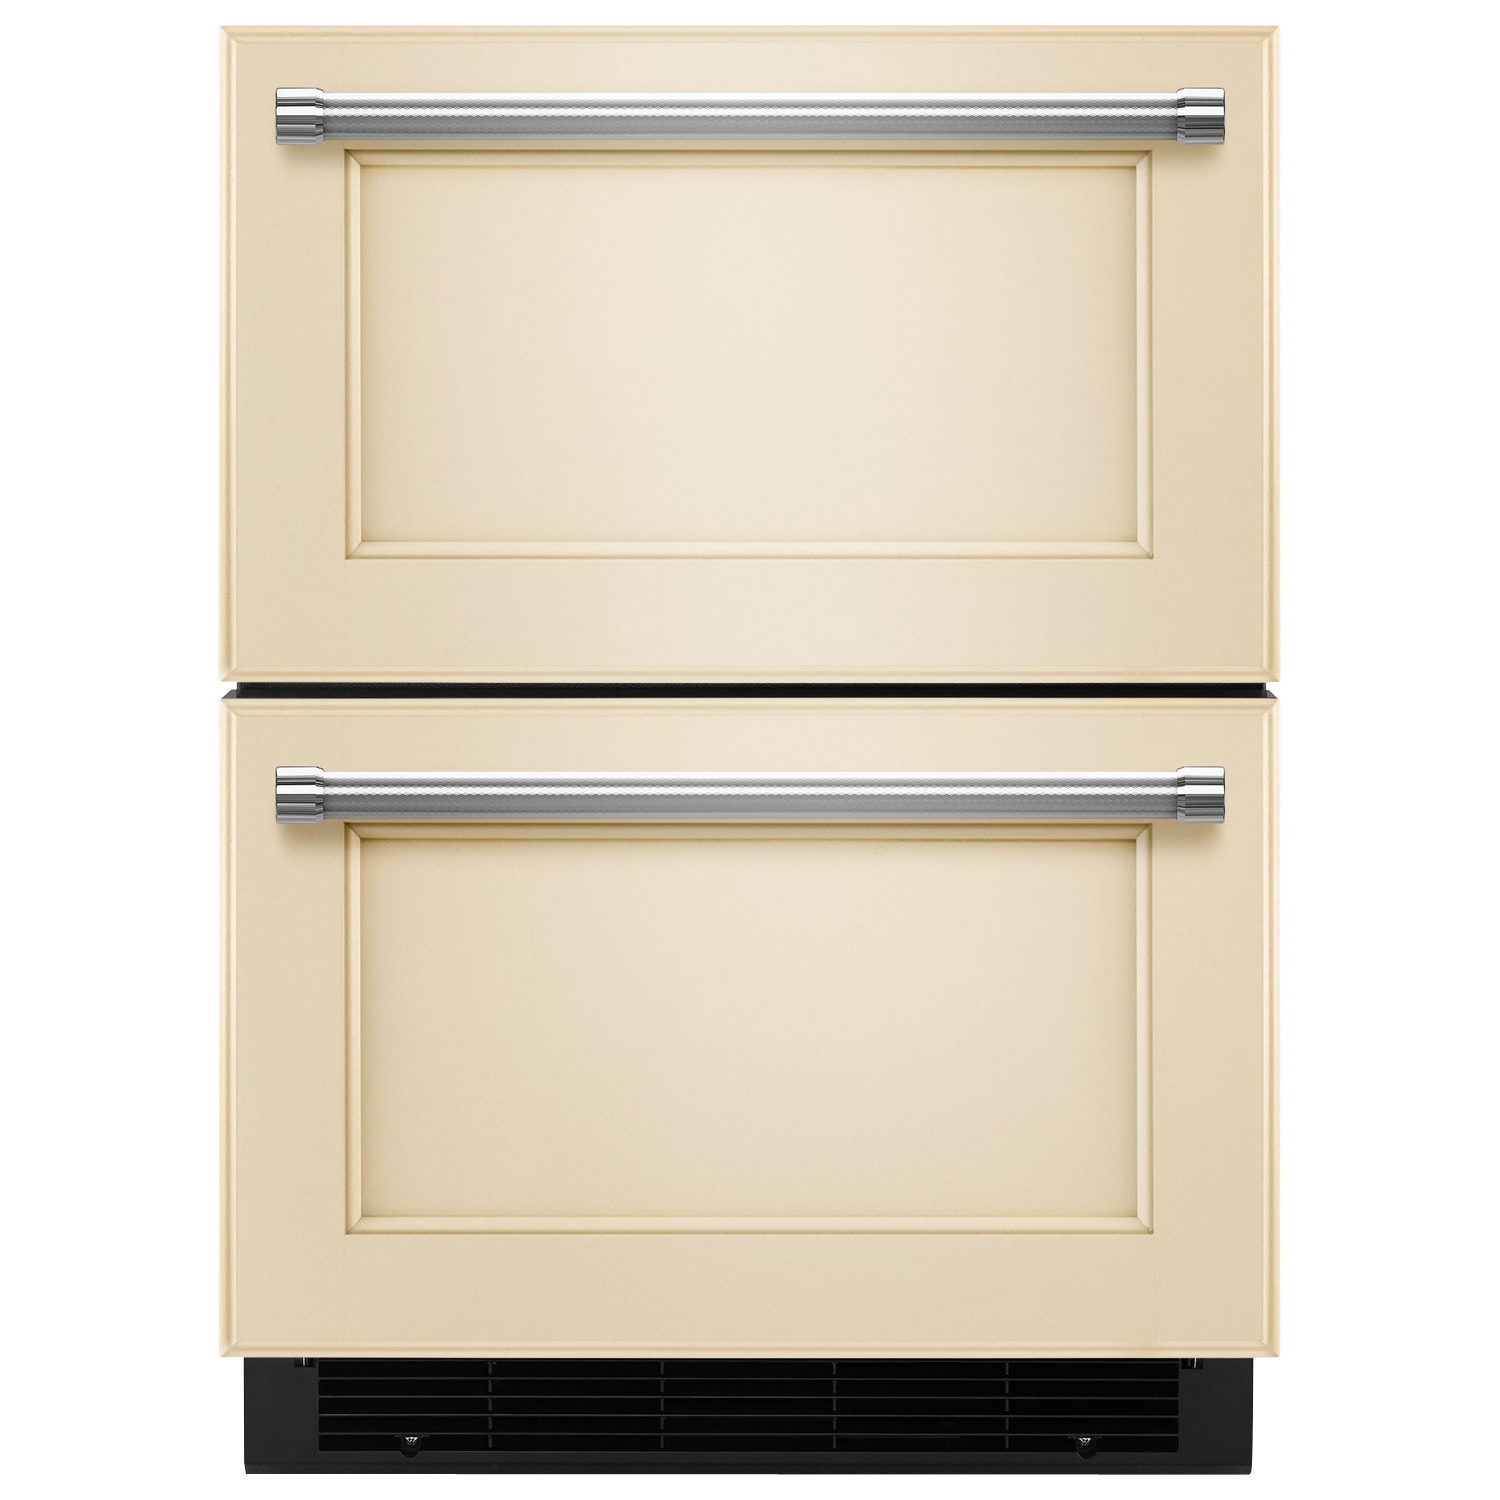 KitchenAid Refrigerator Model KUDF204EPA